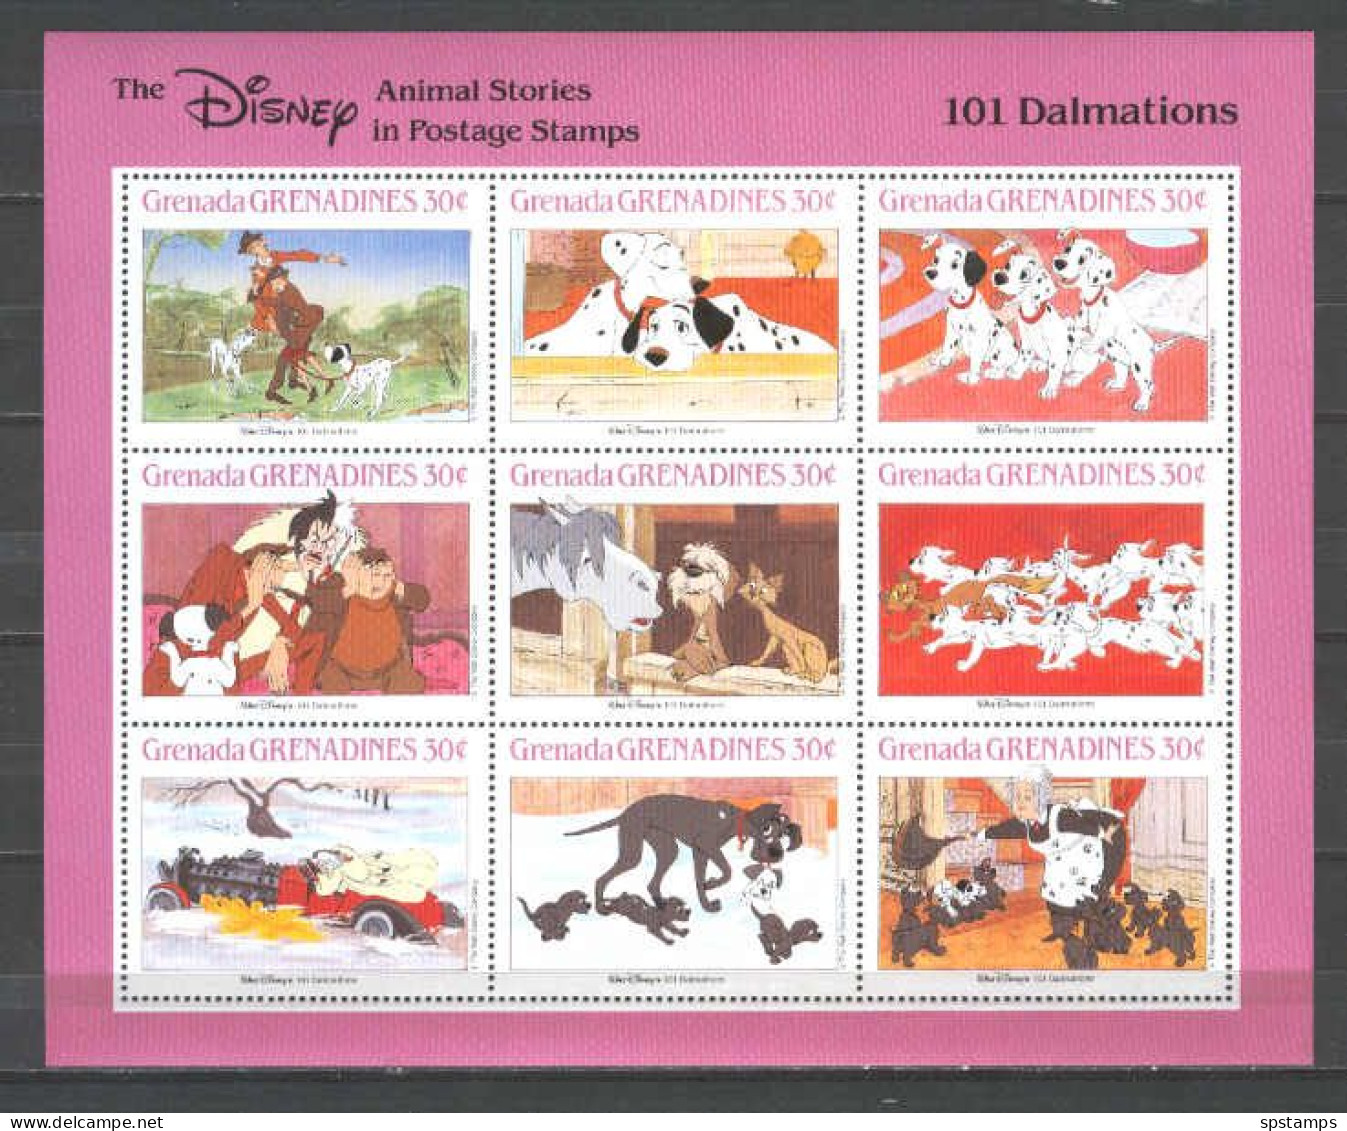 Disney Grenada Gr 1988 Animal Stories - 101 Dalmations Sheetlet MNH - Disney